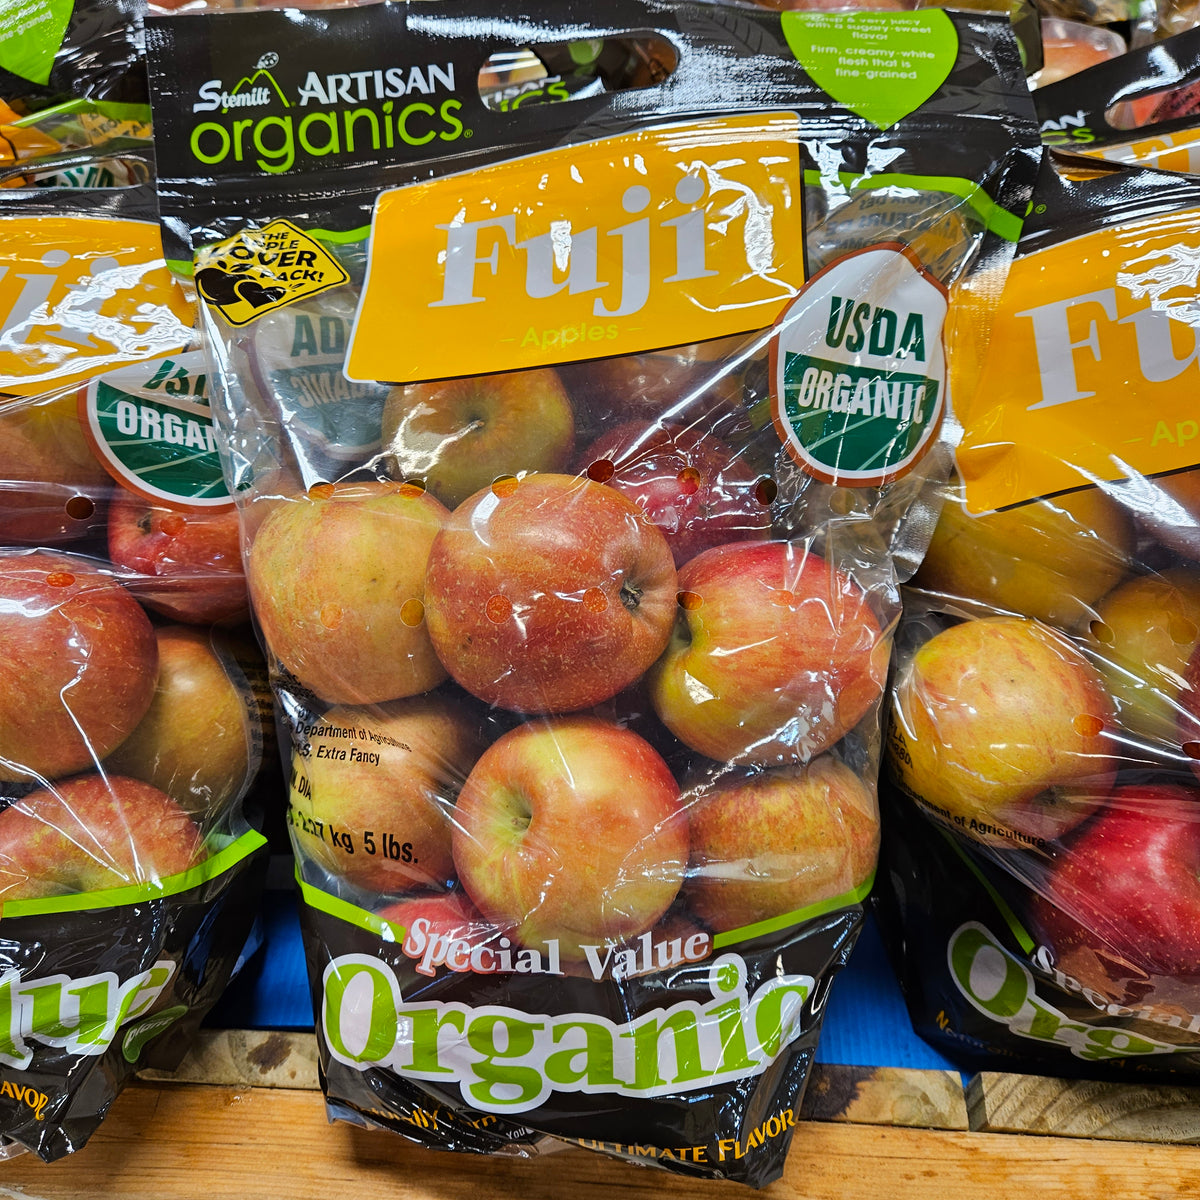 Organic Gala Apples (5 lbs.)